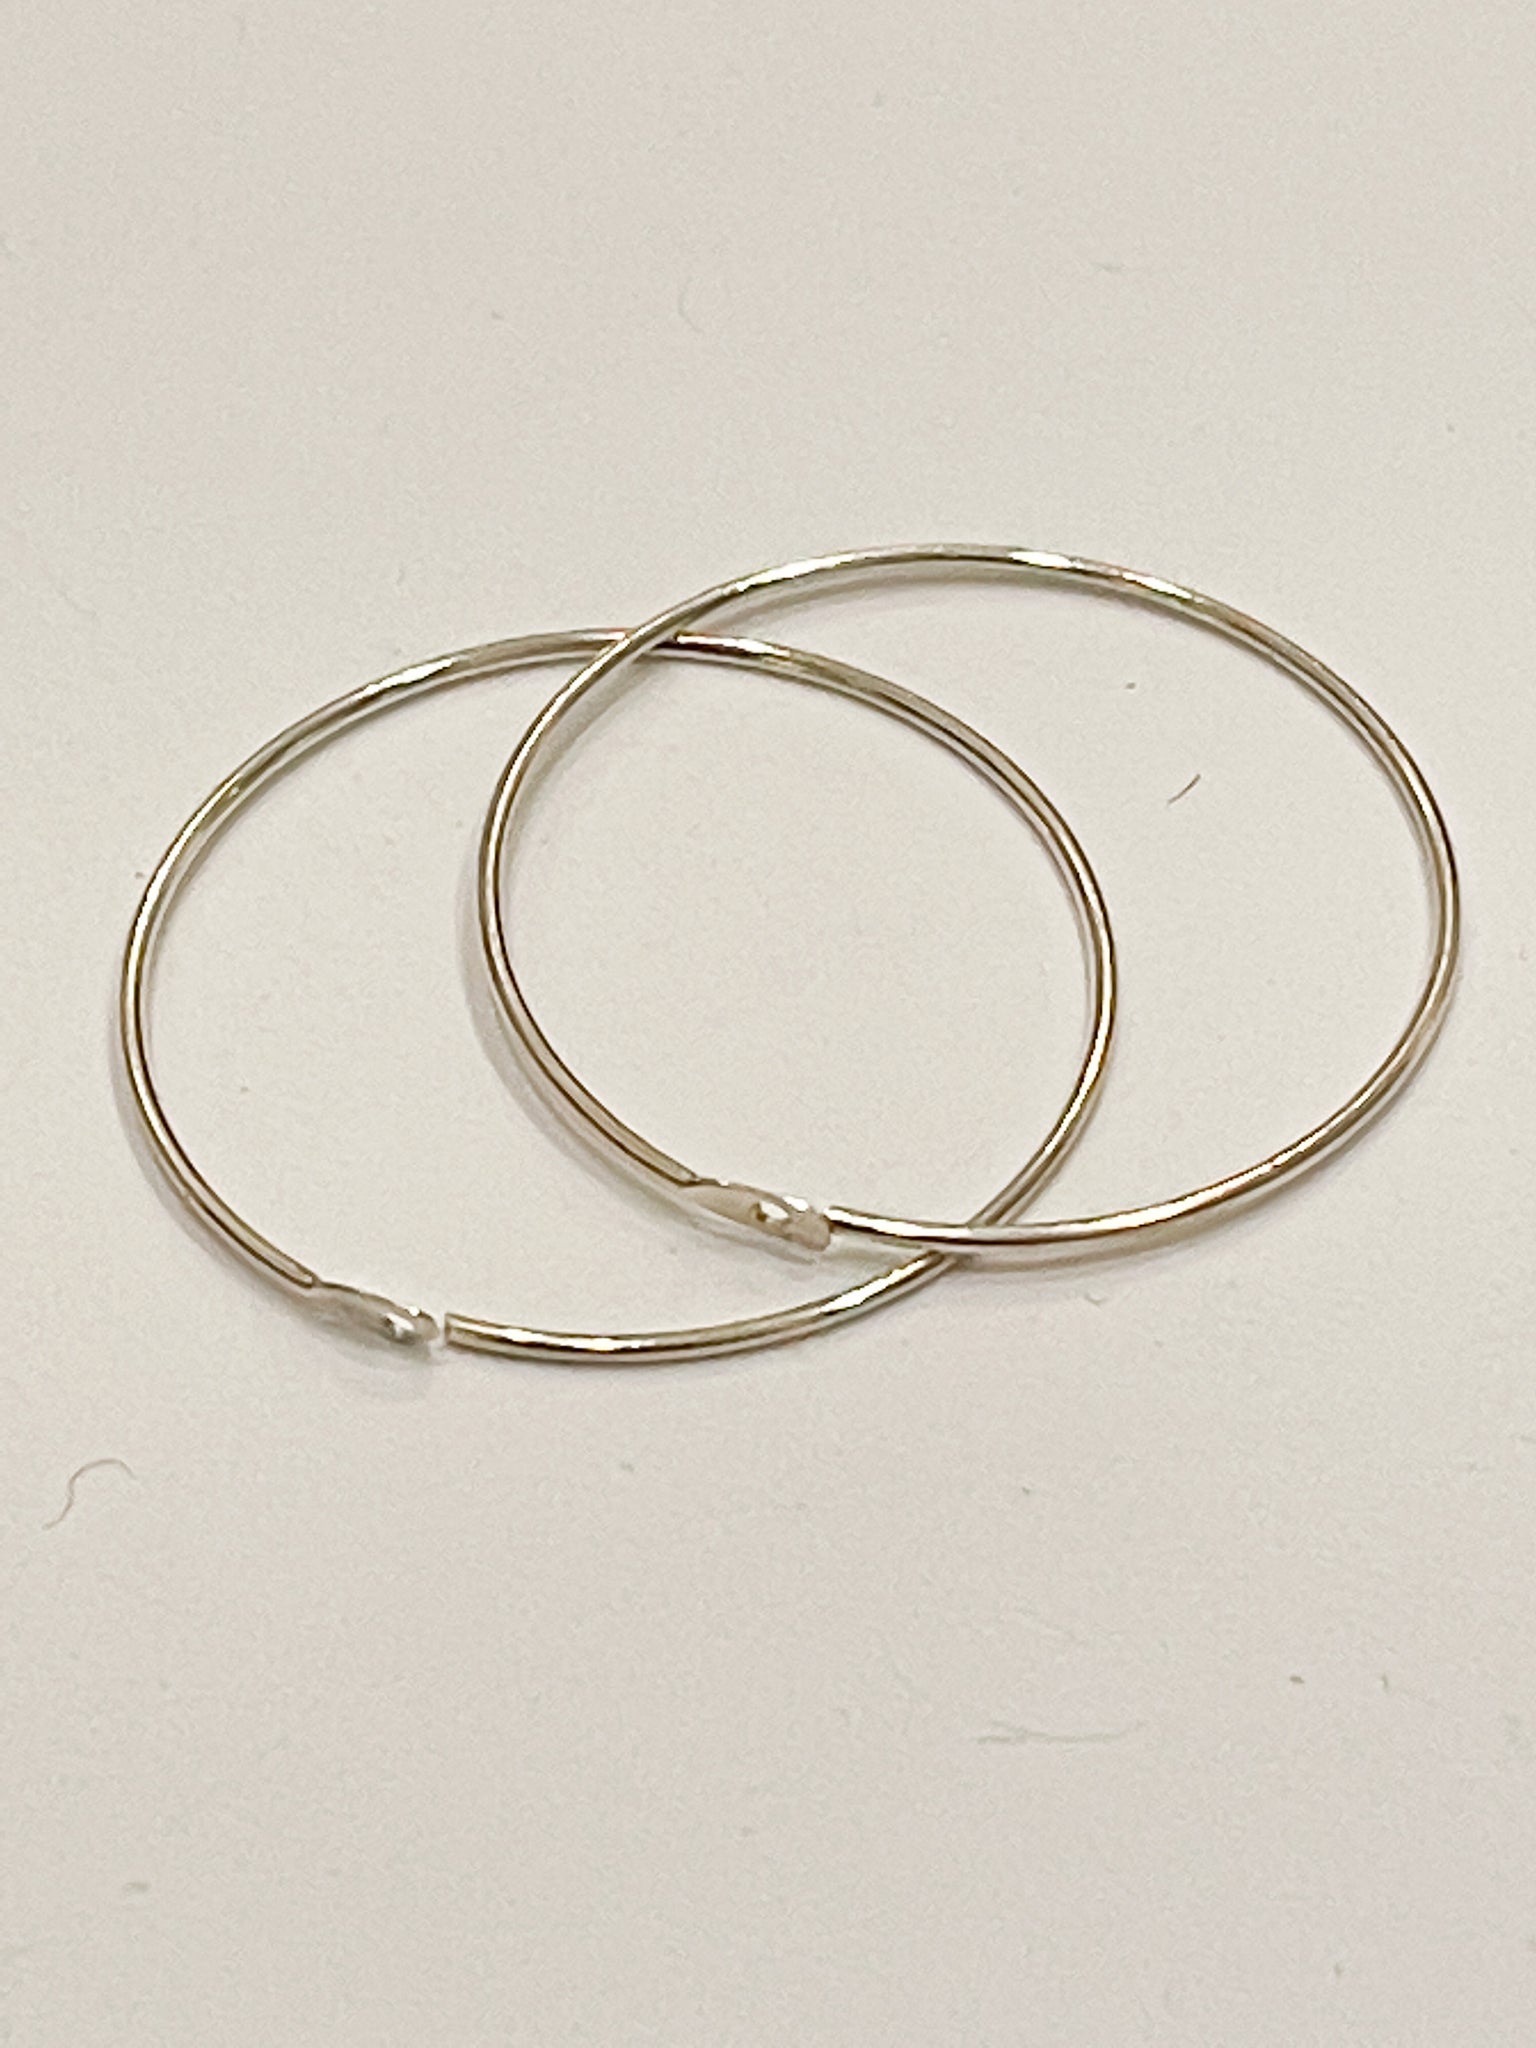 SALE Wire Beading Hoop Earrings - Silver-Toned